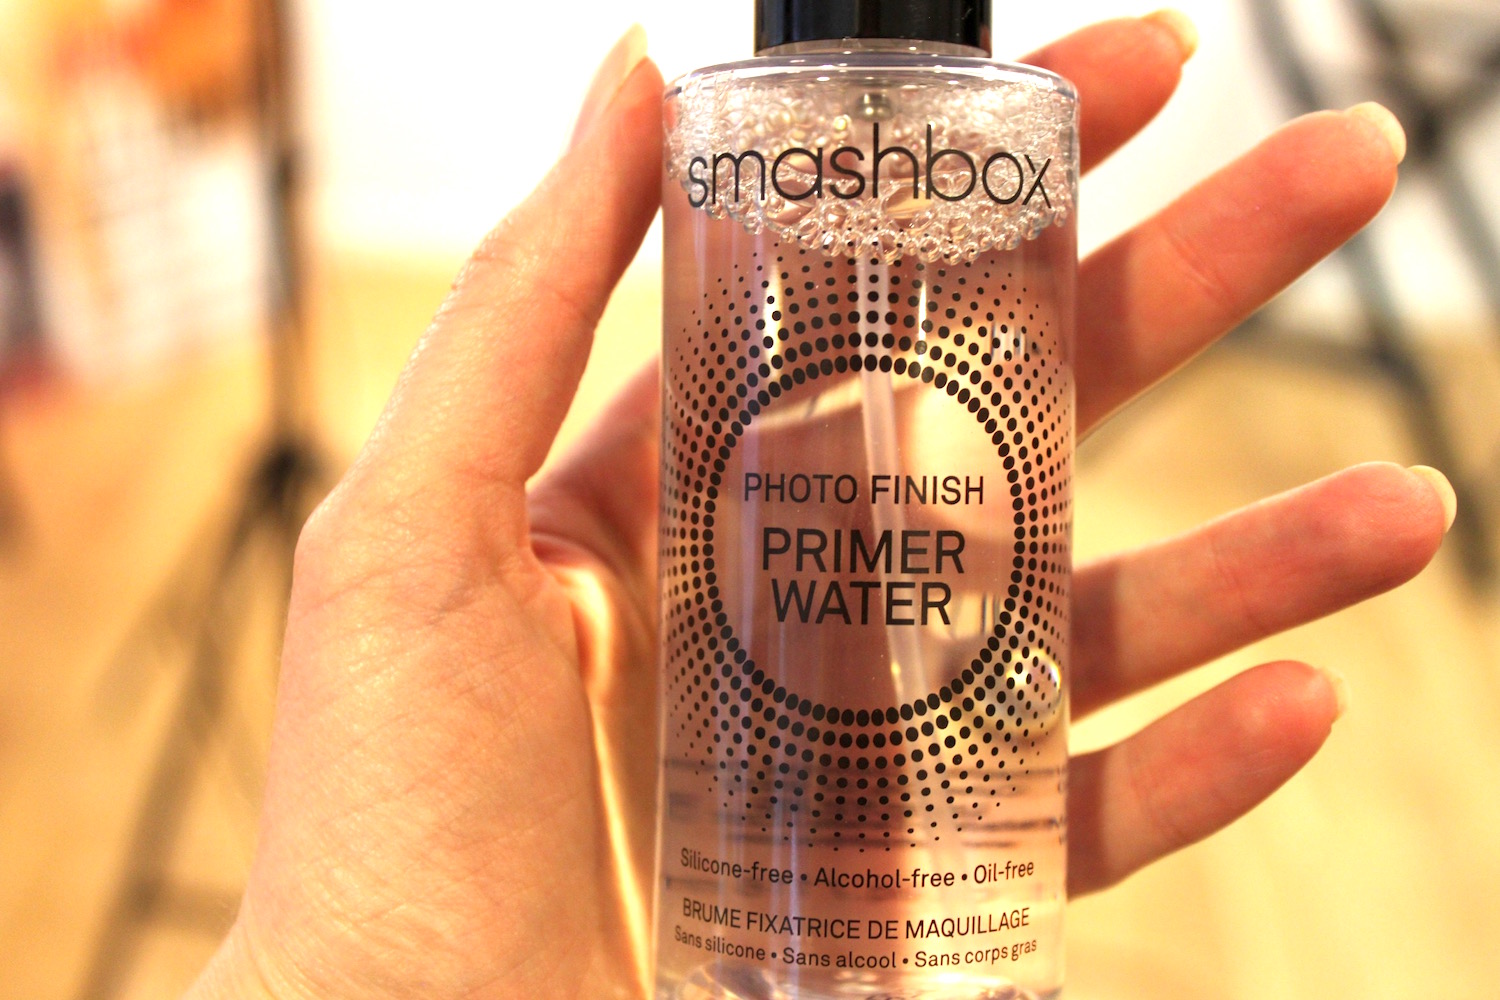 Smashbox primer water